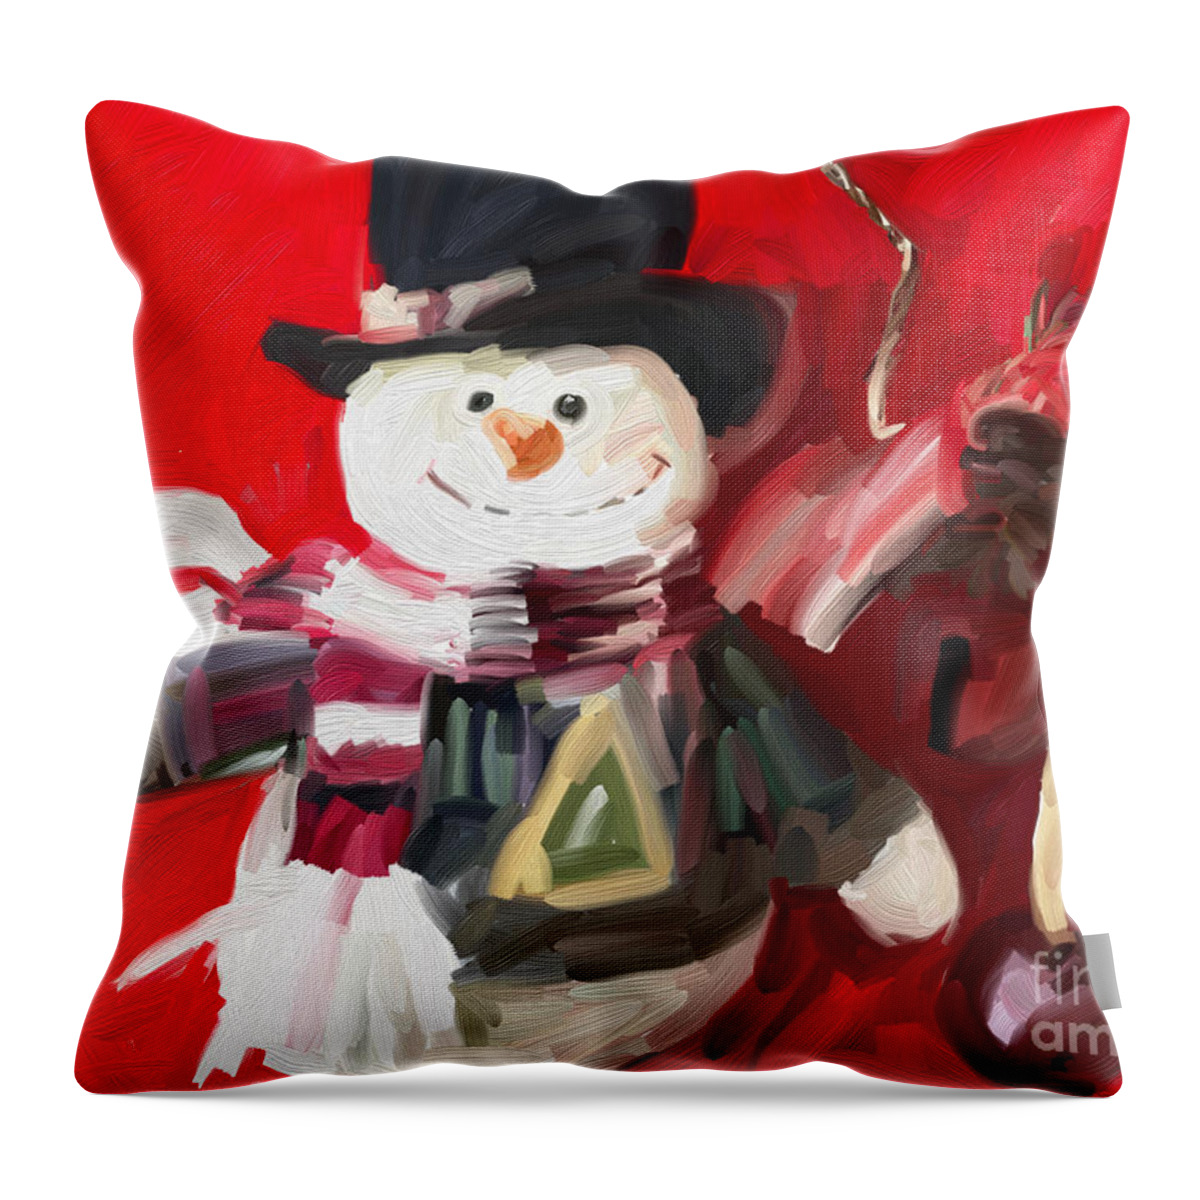 Snowman Christmas Ornament Art Throw Pillow featuring the digital art Snowman Christmas Ornament Art by Patricia Awapara